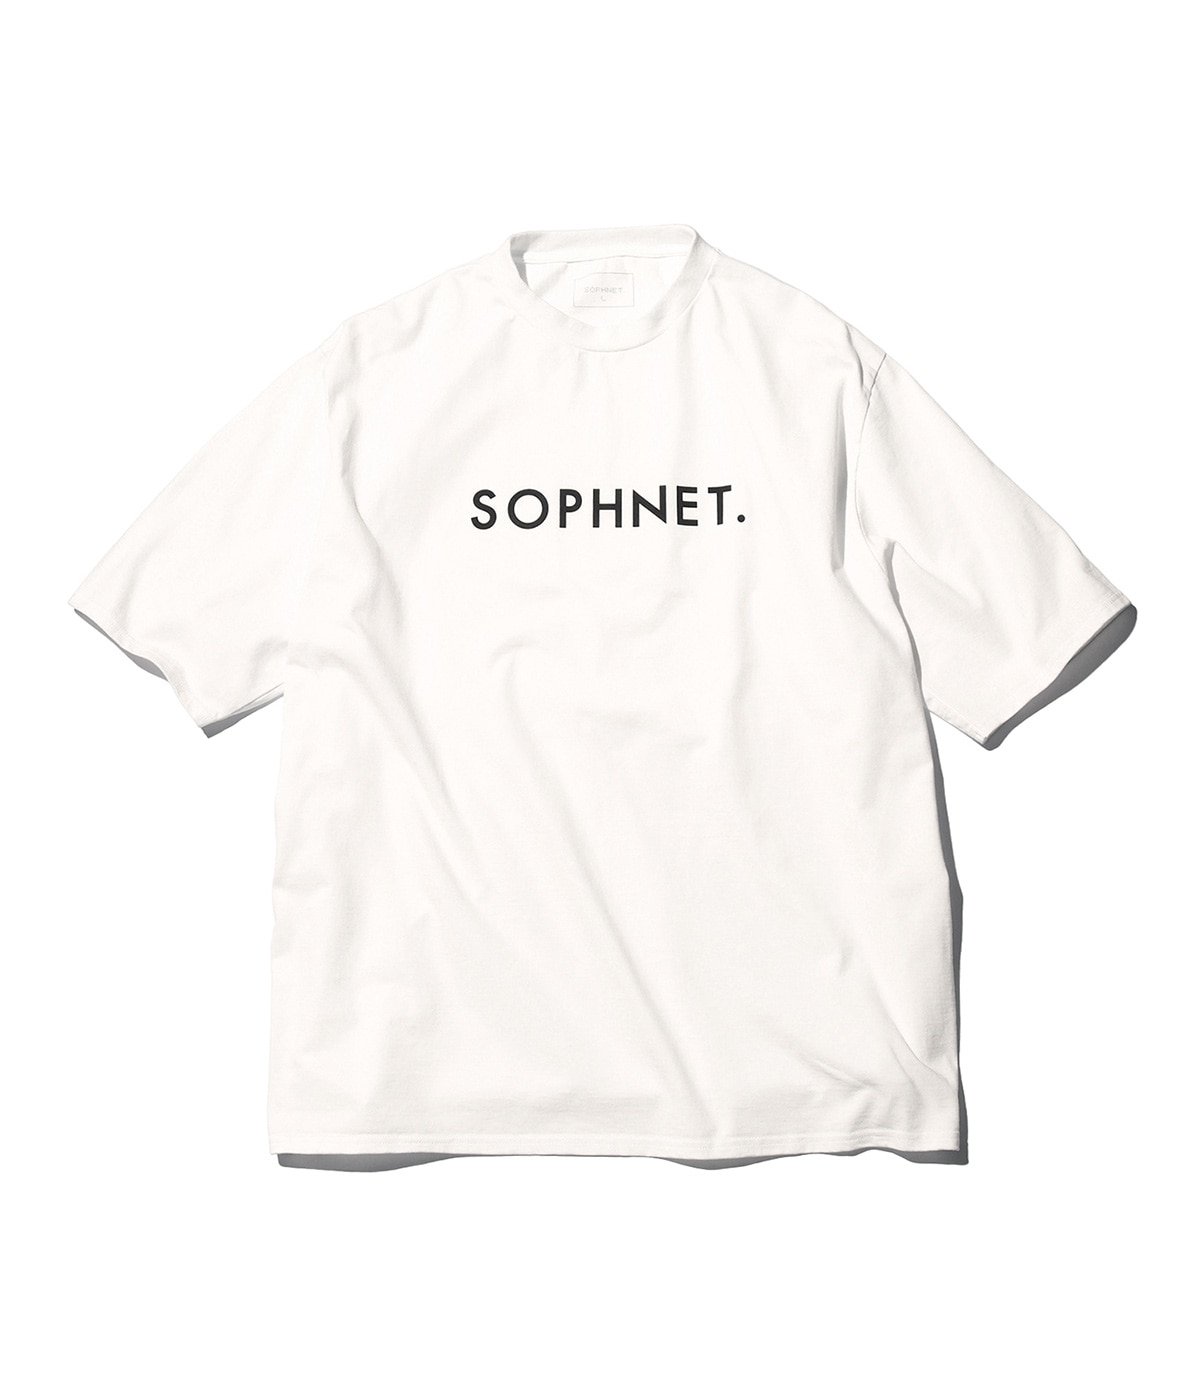 Sophnet.